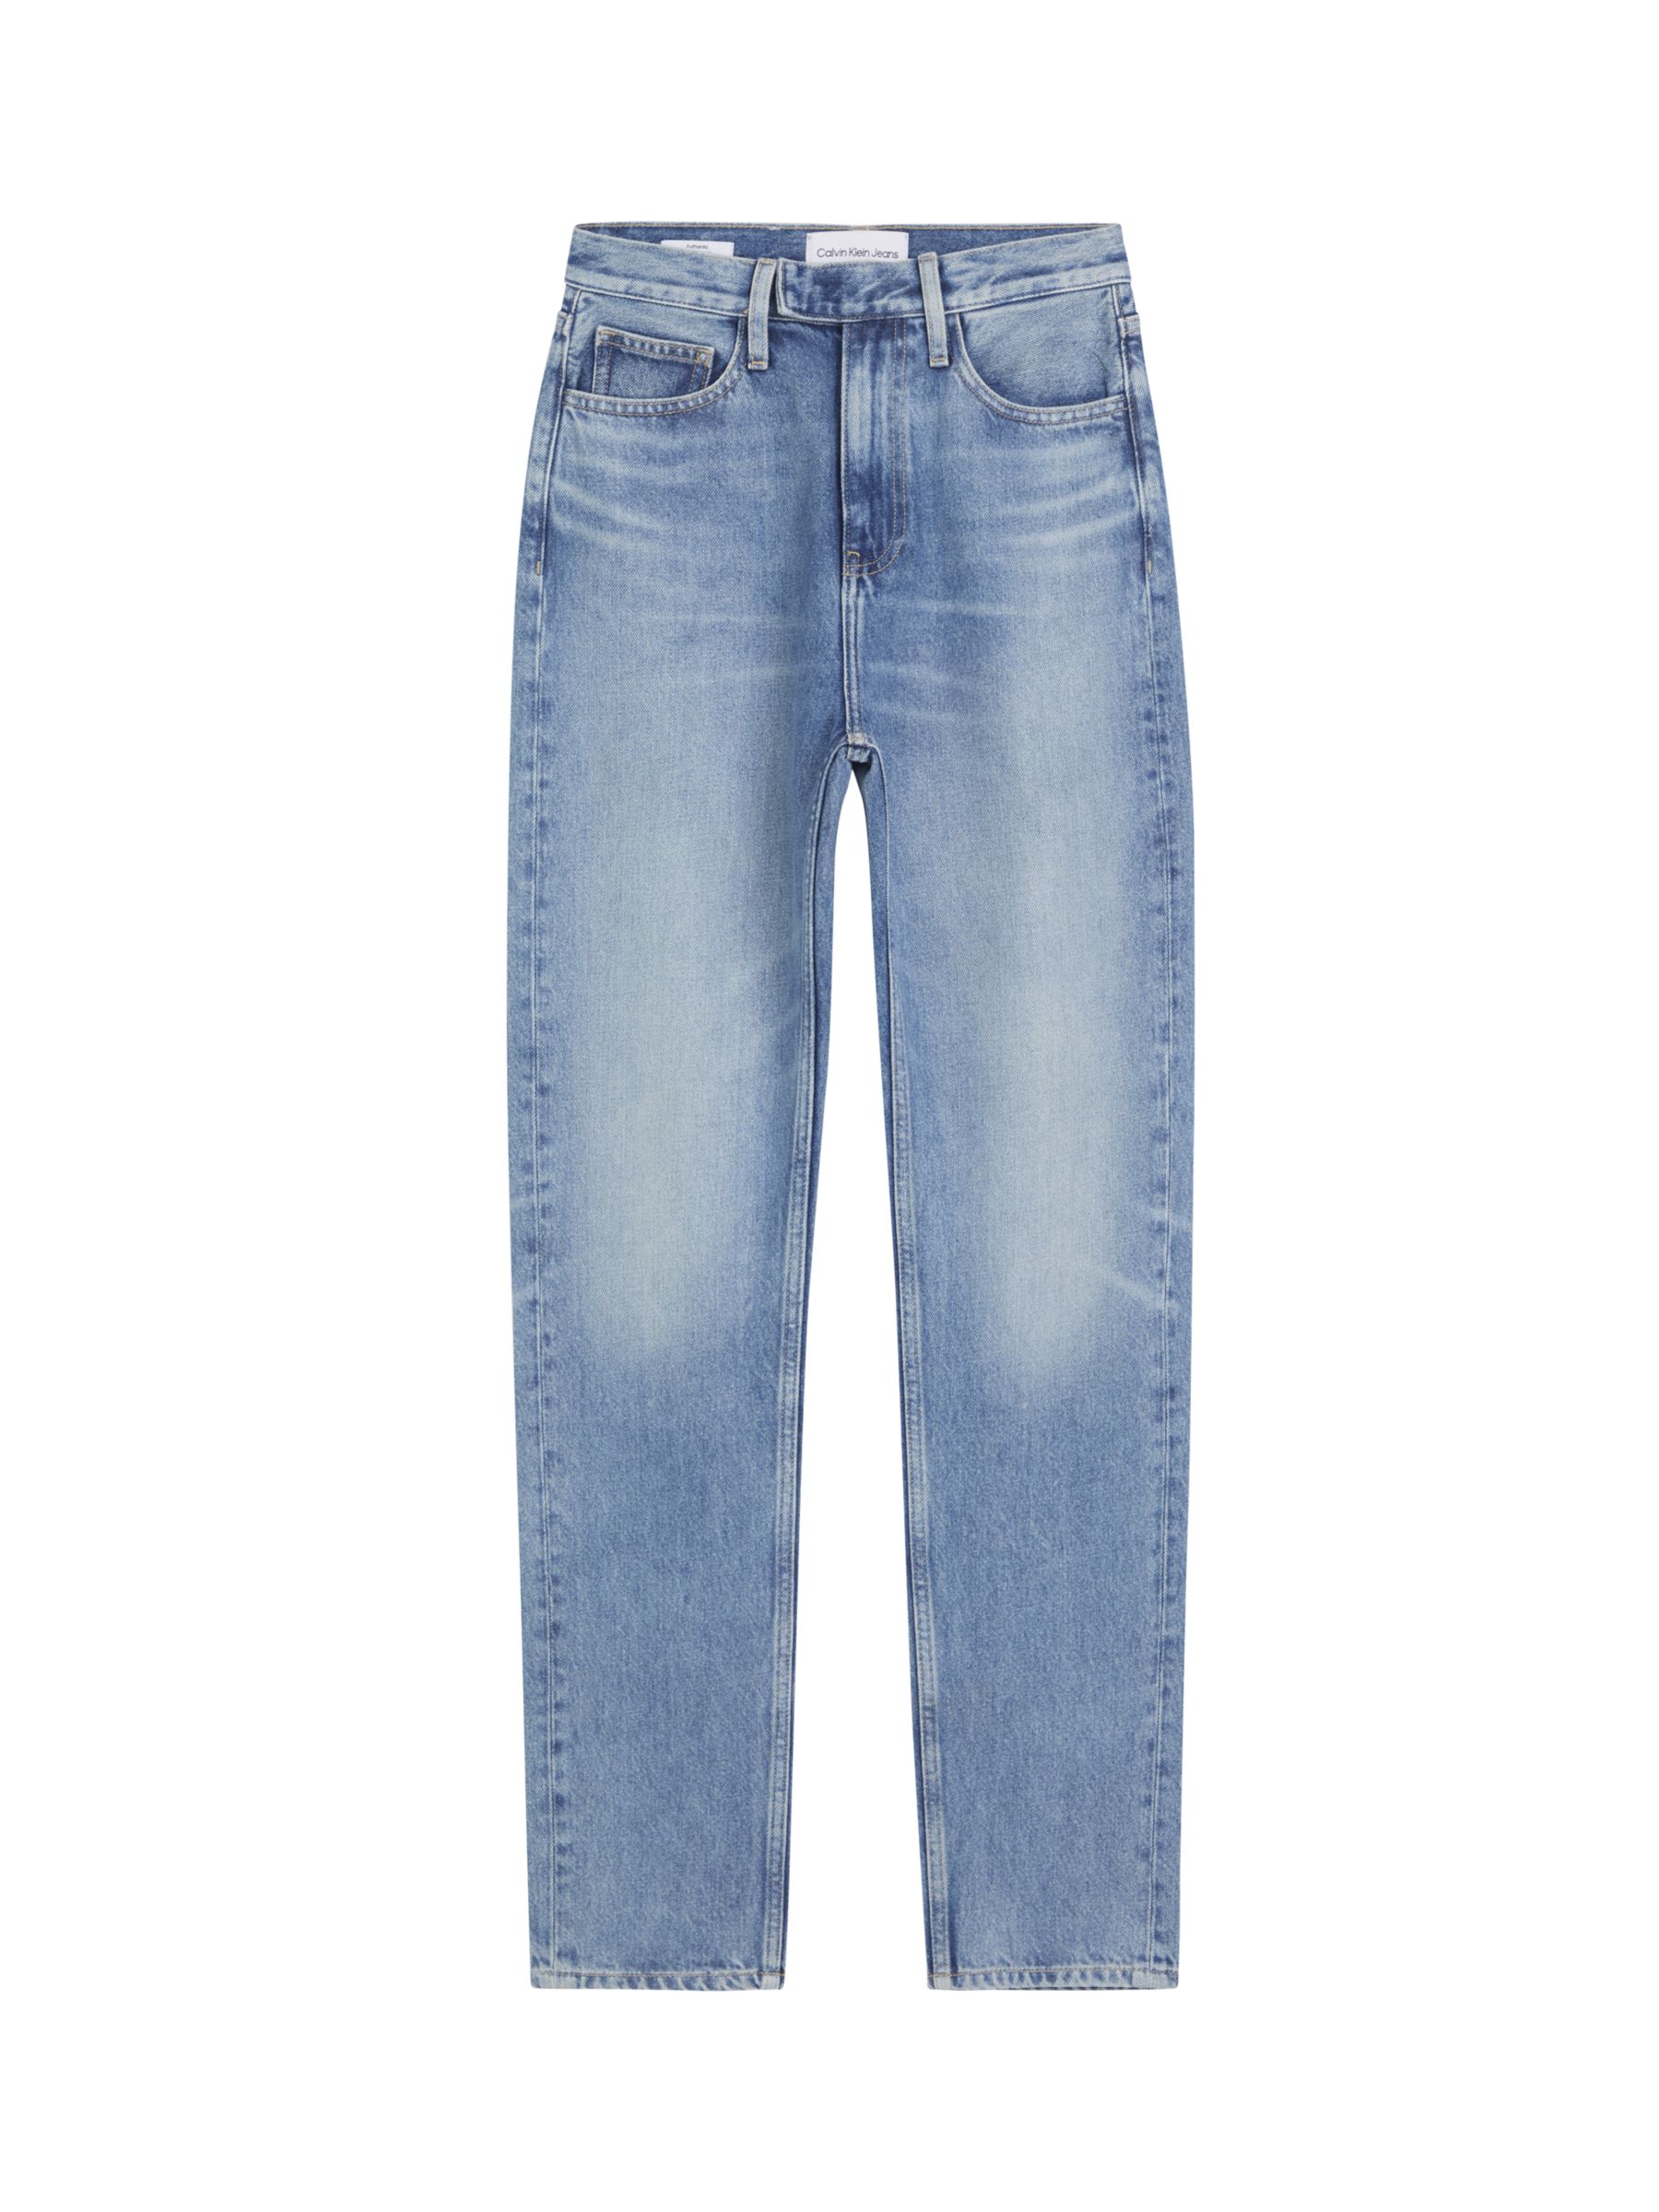 Calvin Klein Authentic Slim Jeans, Mid Blue, 25R